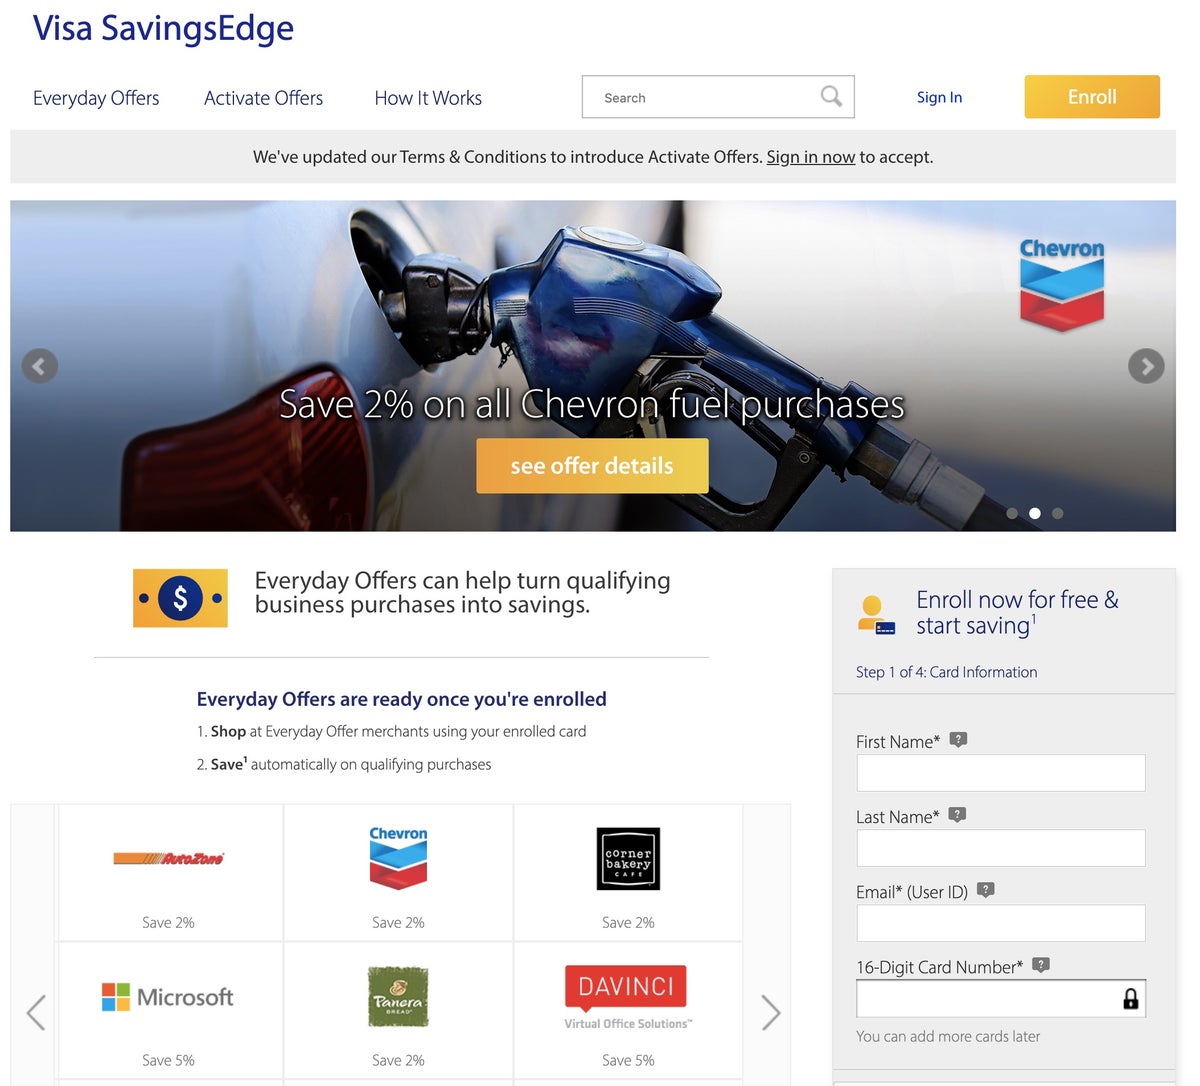 The Visa SavingsEdge Website